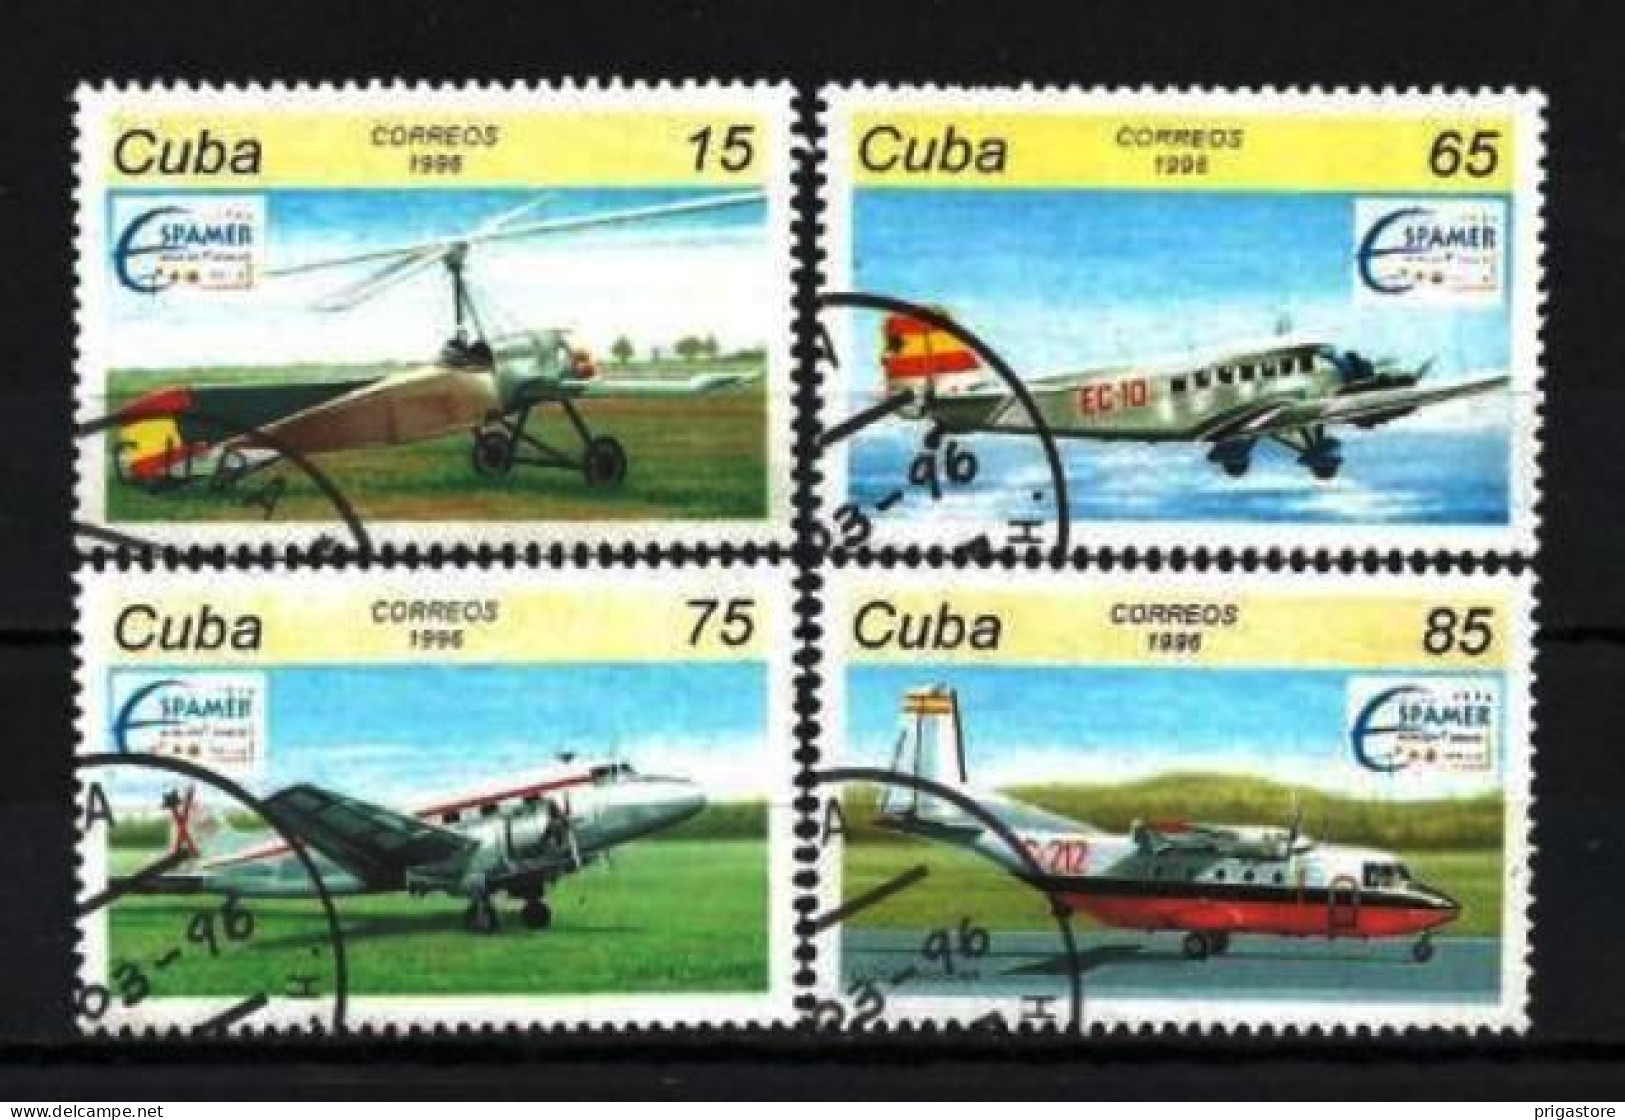 Cuba 1996 Avions (28) Yvert N° 3520 à 3523 Oblitéré Used - Usati